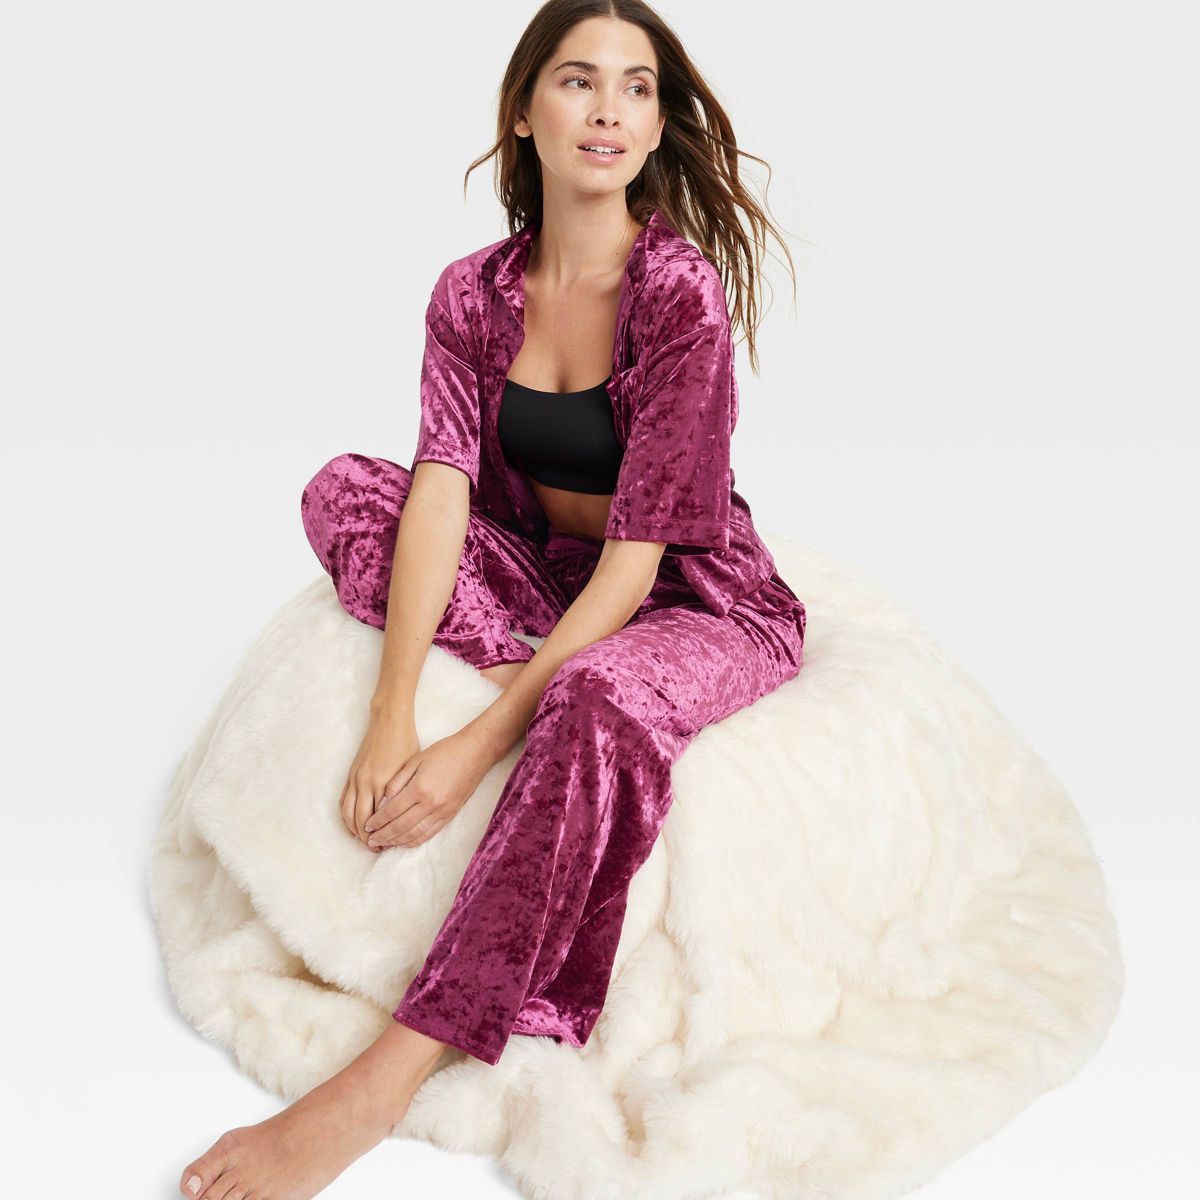 Women's Luxe Velour Pajama Set - Stars Above™ | Target